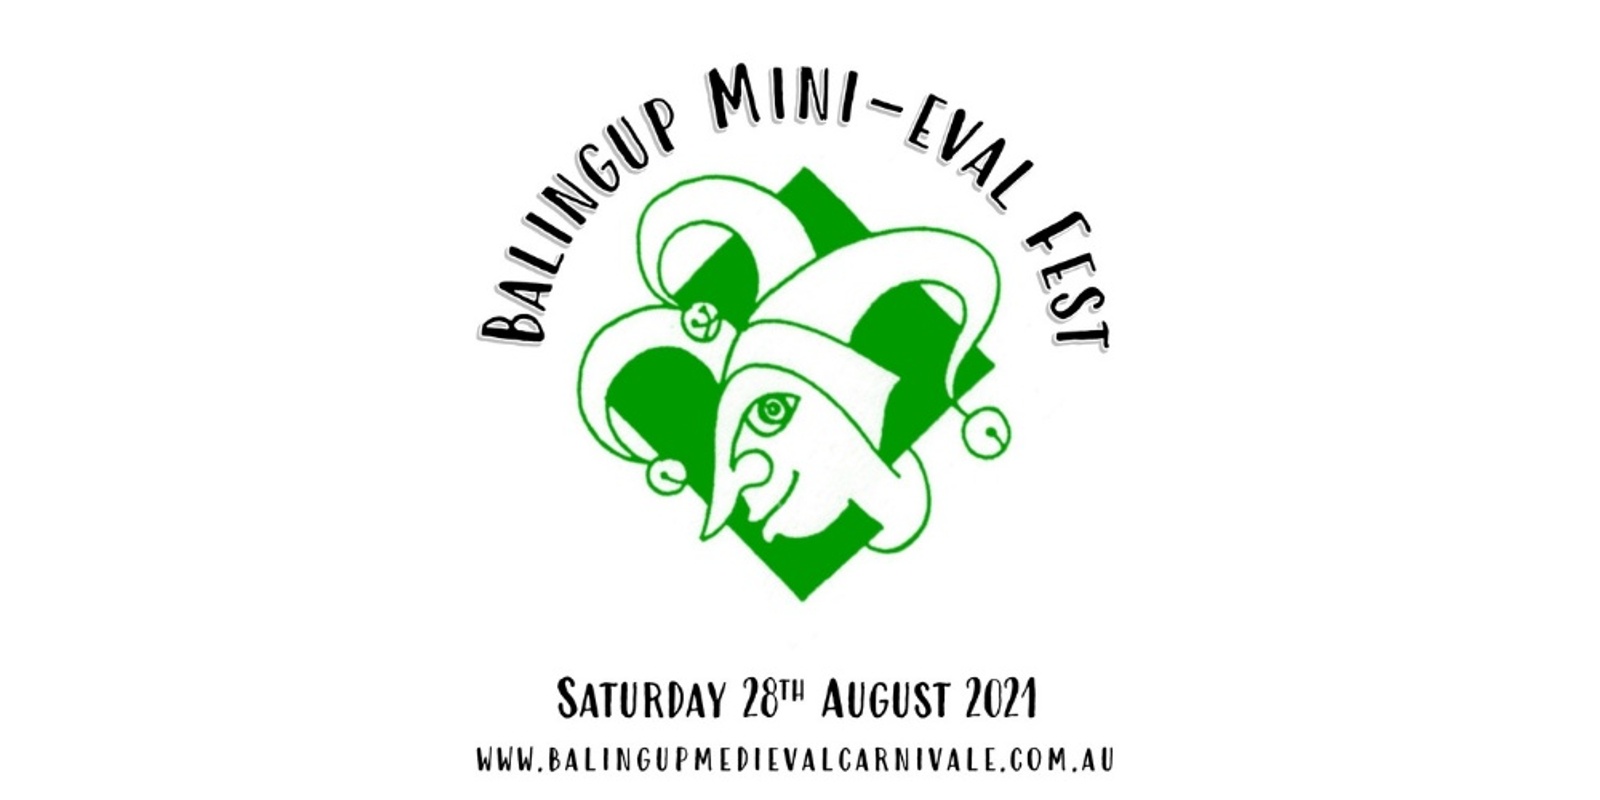 Balingup Mini-Eval Fest 2021